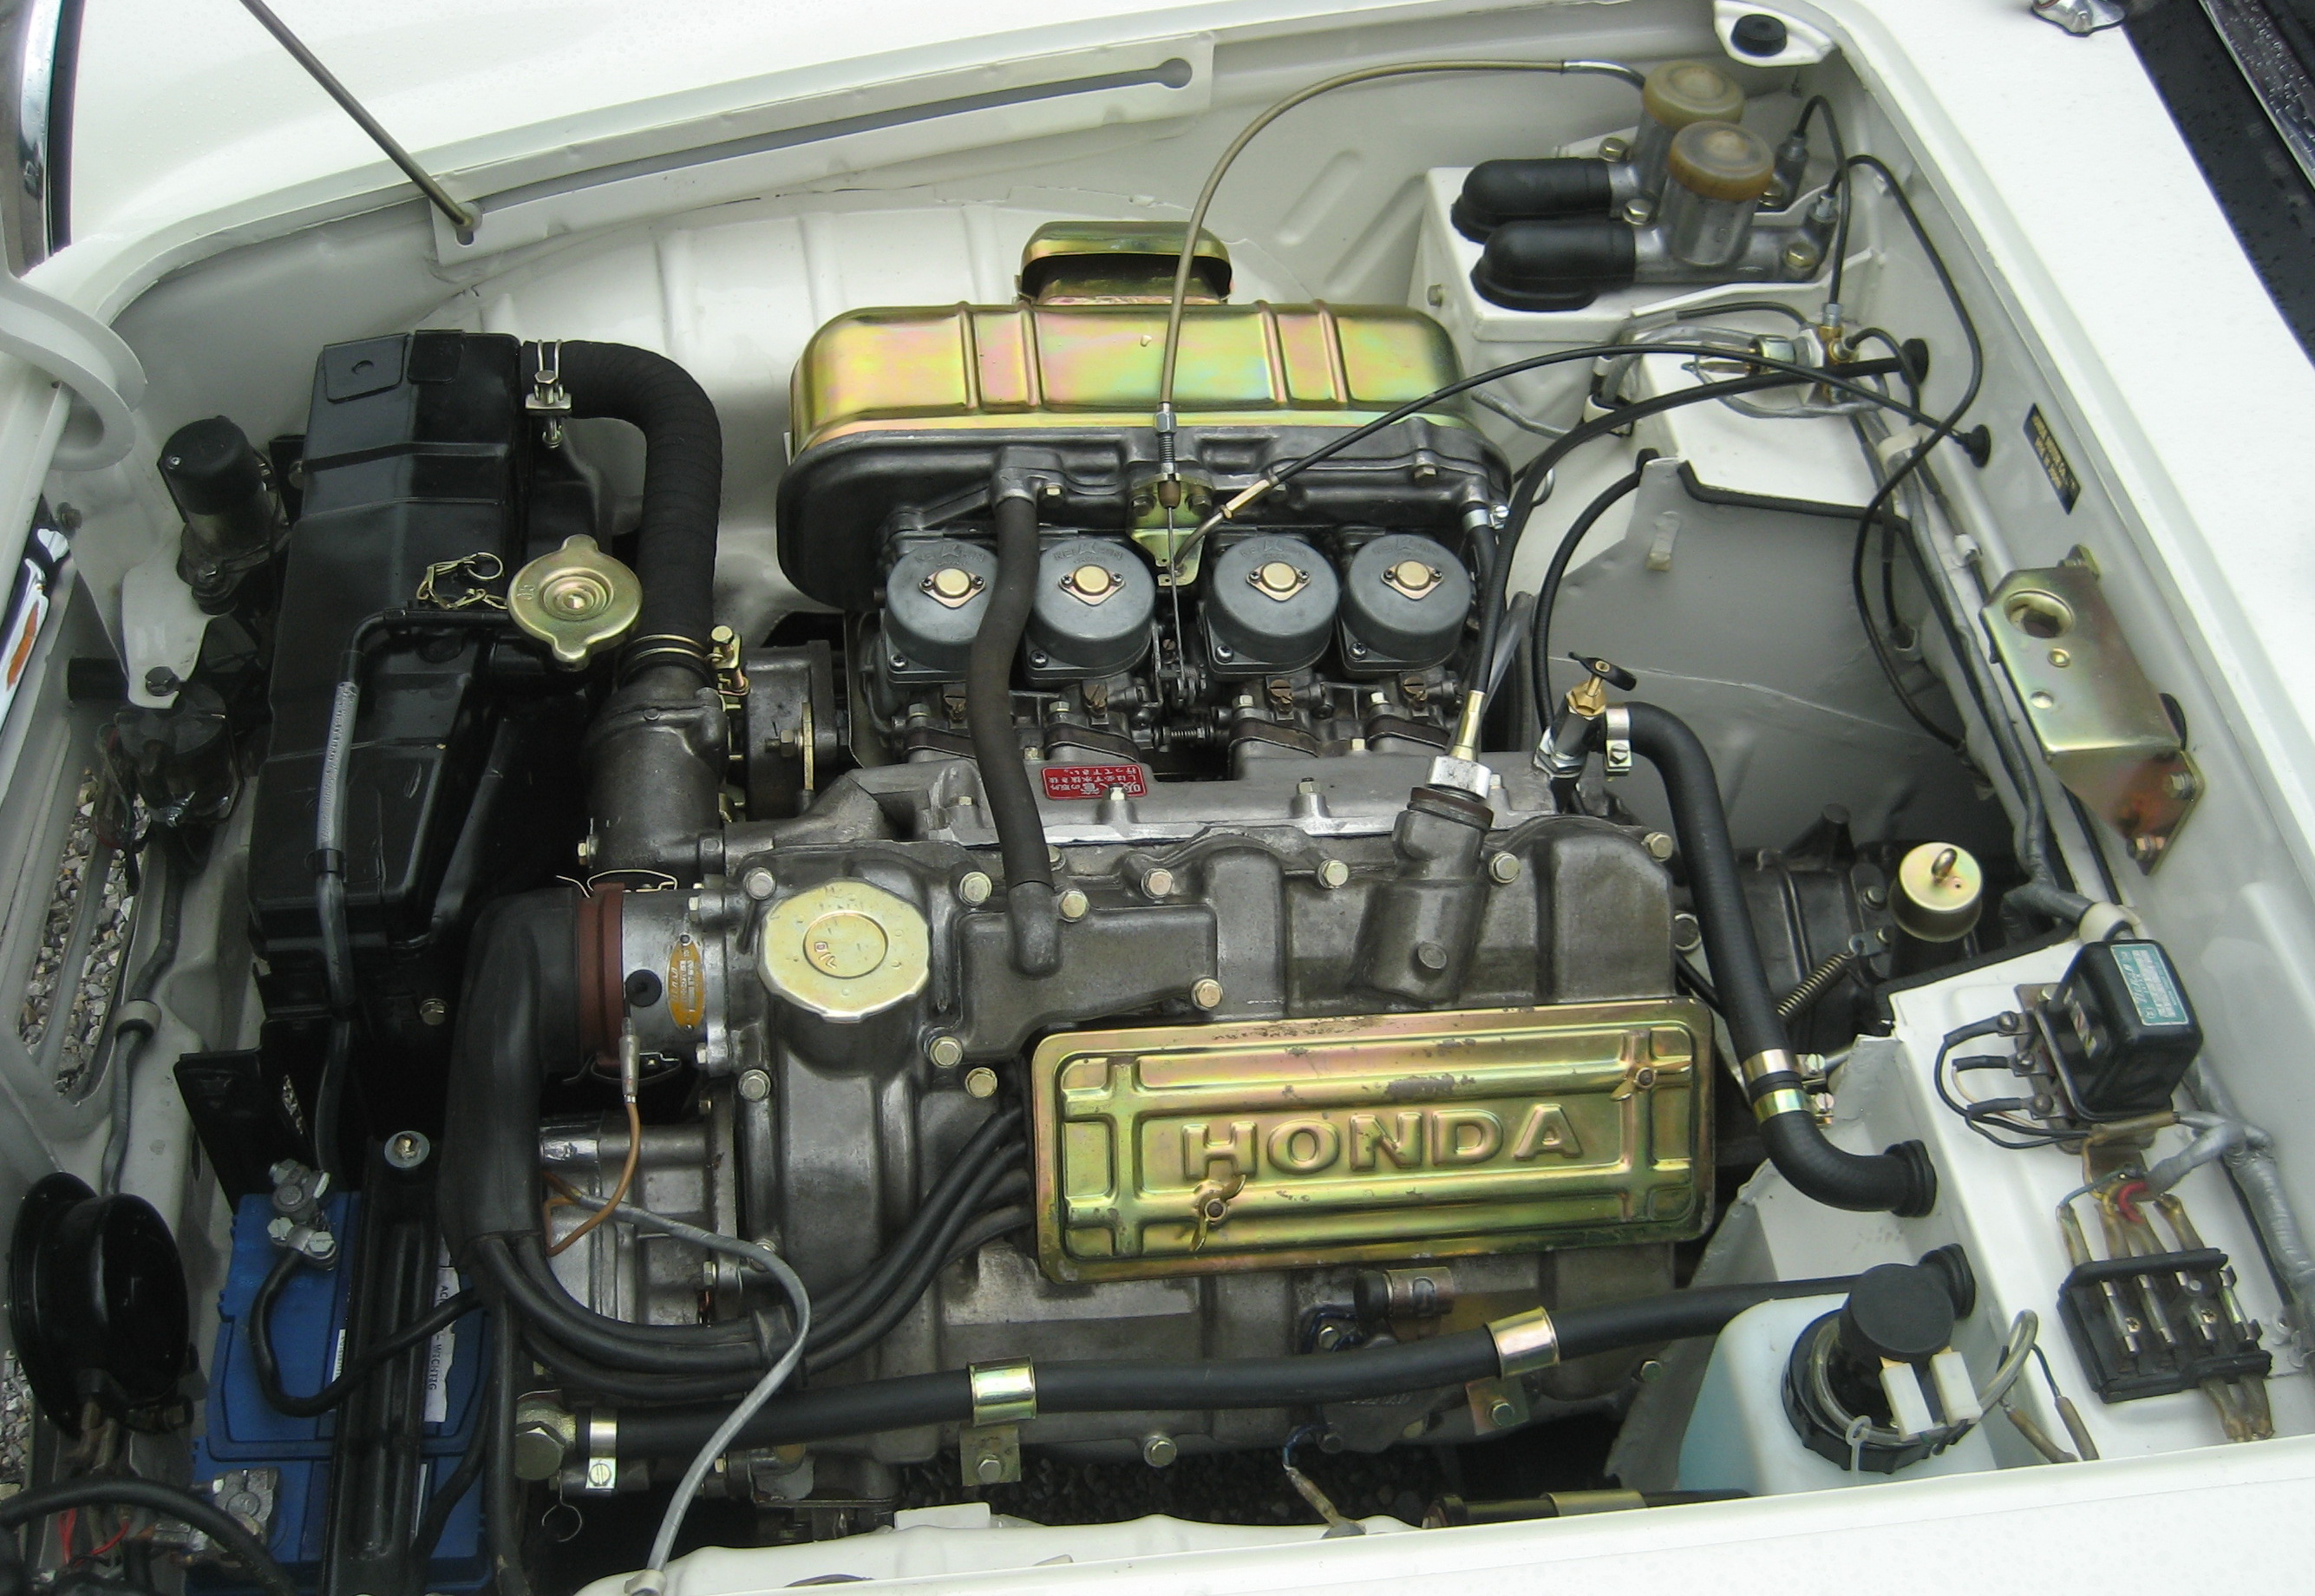 Honda S500 engine